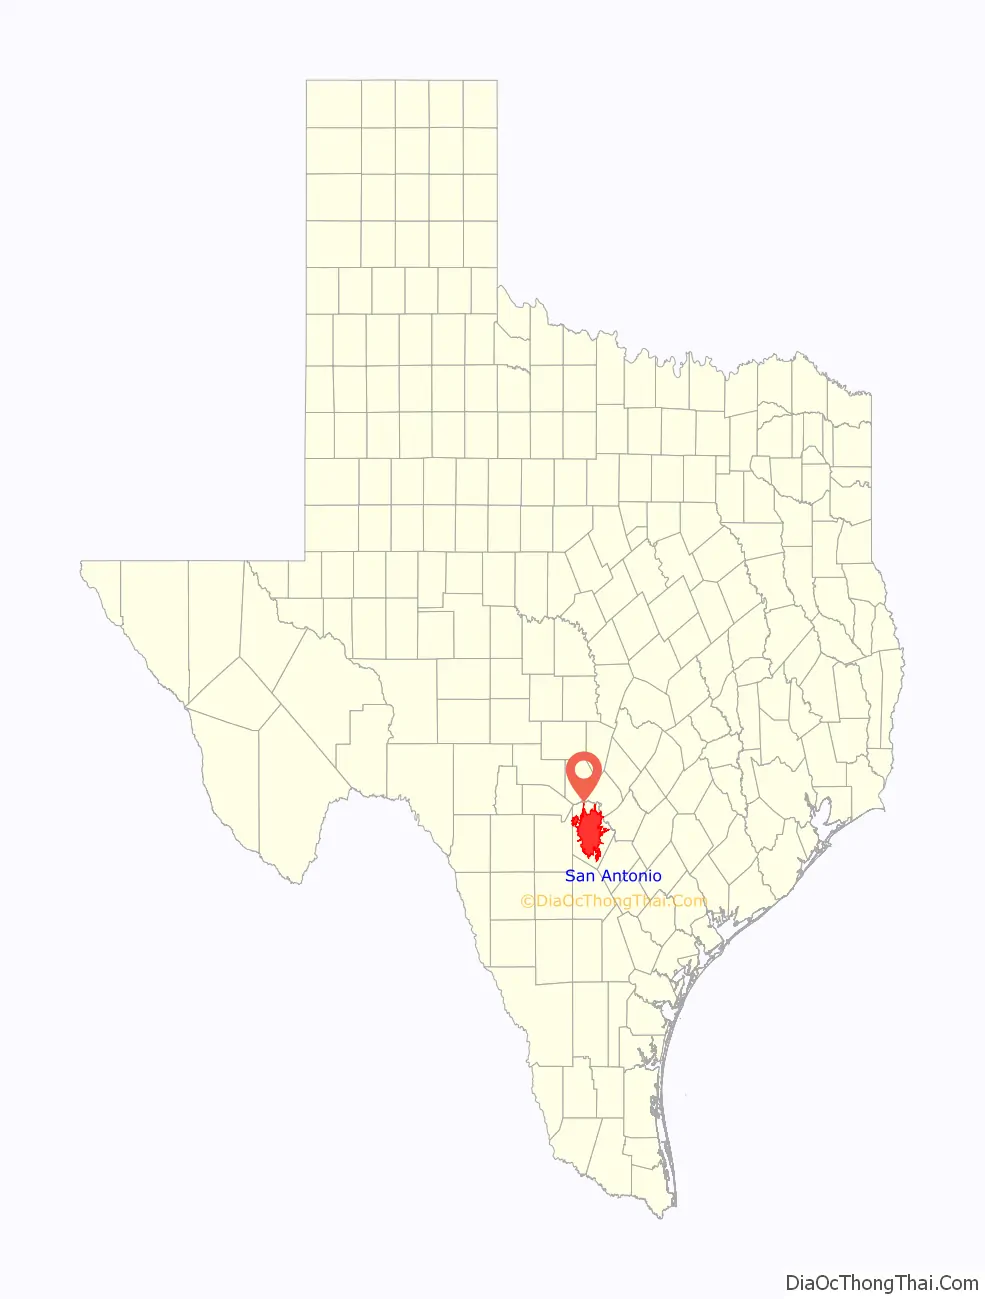 San Antonio location on the Texas map. Where is San Antonio city.